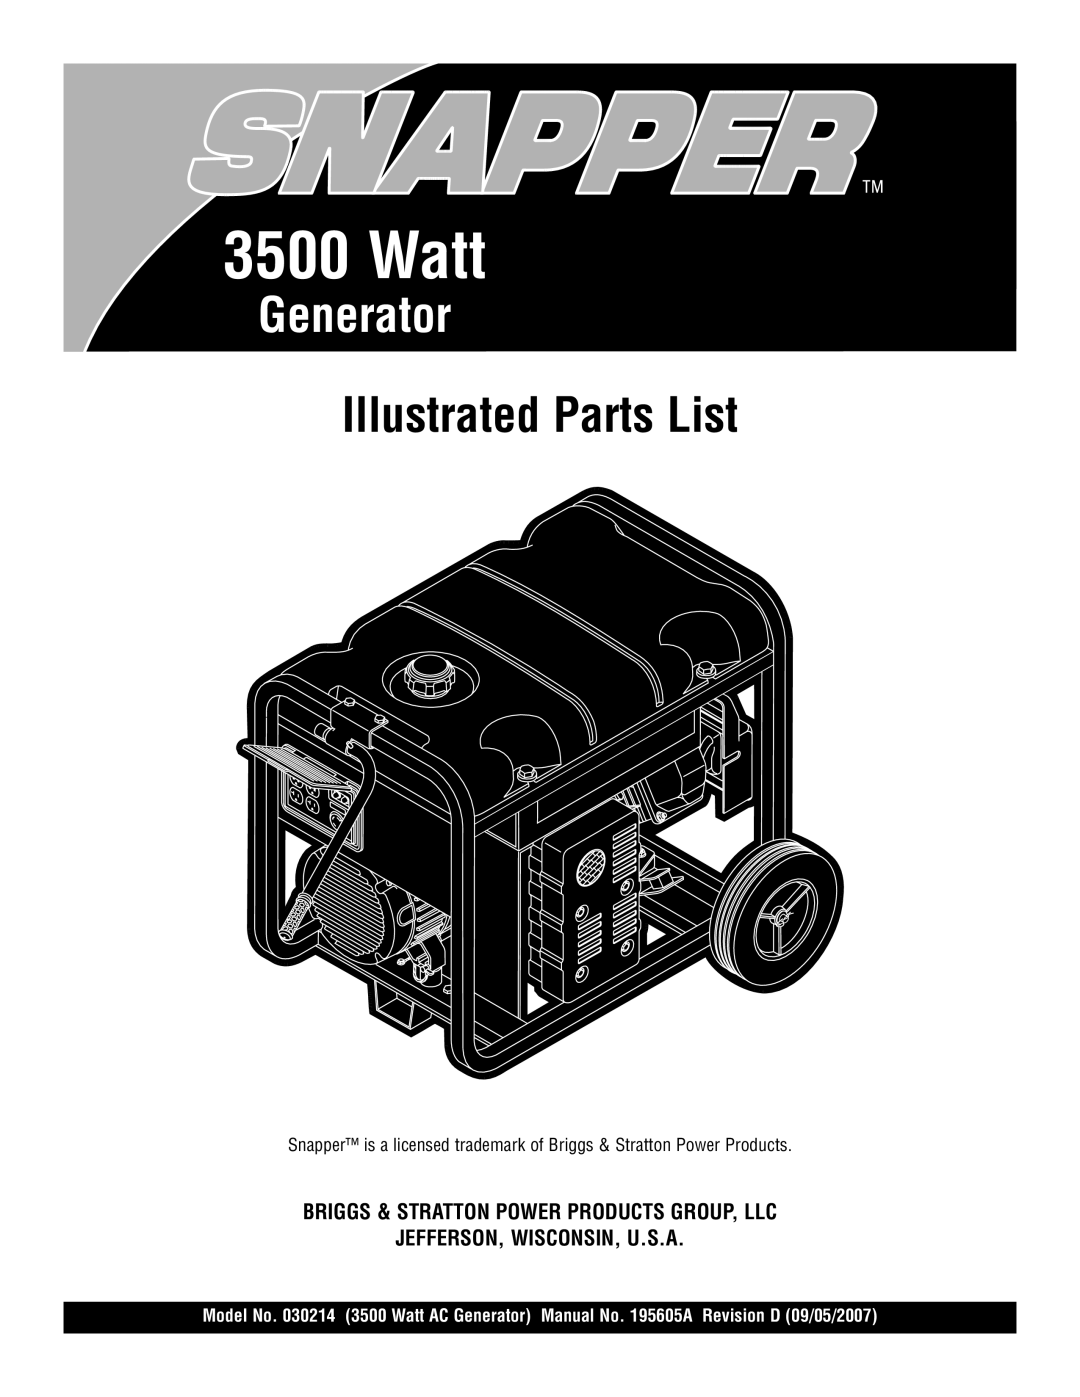 Snapper 30214 manual Watt, Generator, Illustrated Parts List, Briggs & Stratton Power Products Group, Llc 